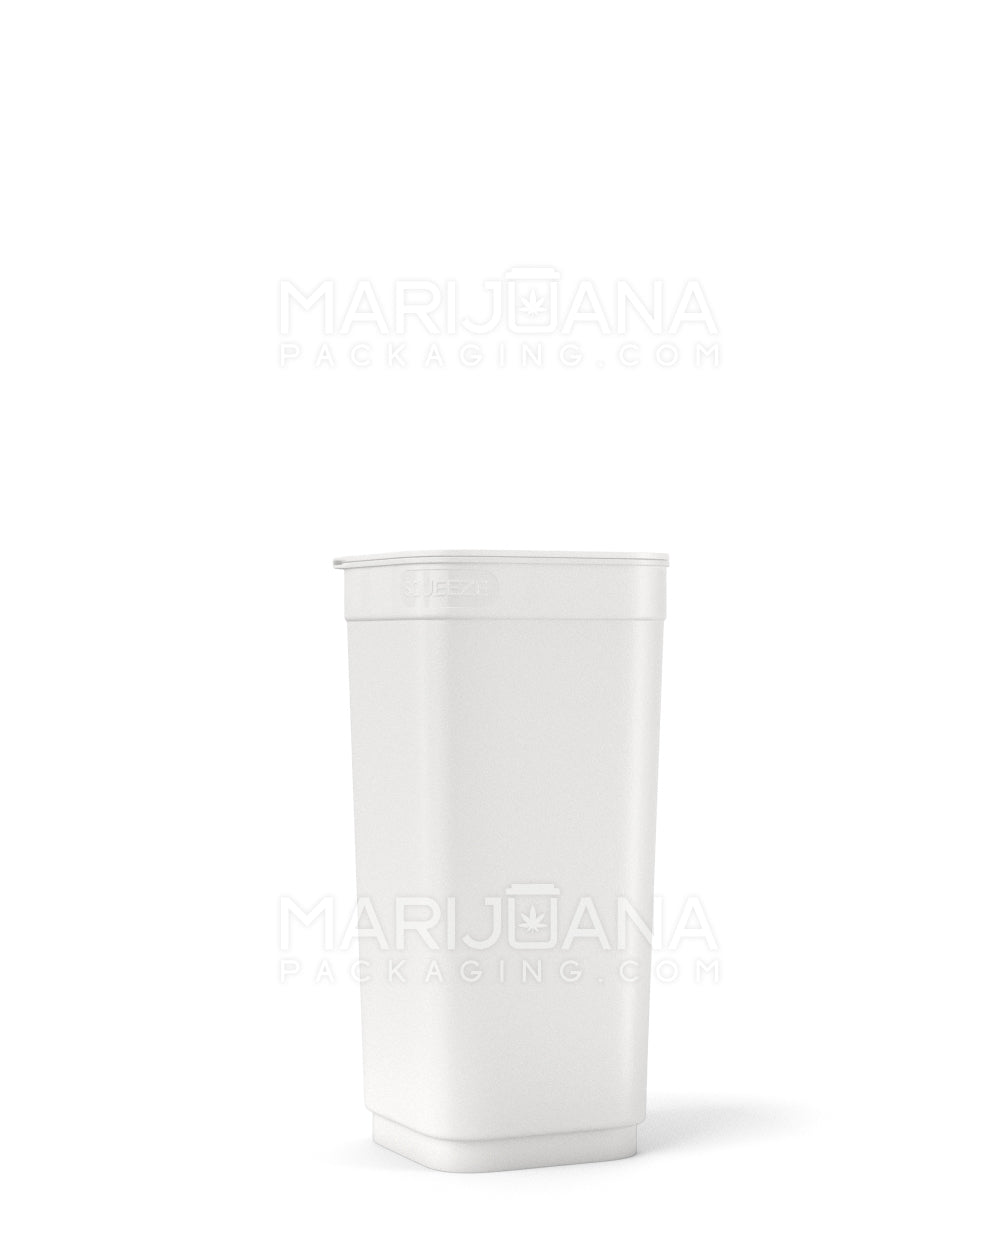 POLLEN GEAR | 100% Recyclable Opaque White Pop Box Pop Top Bottles | 30dr - 7g - 373 Count - 4